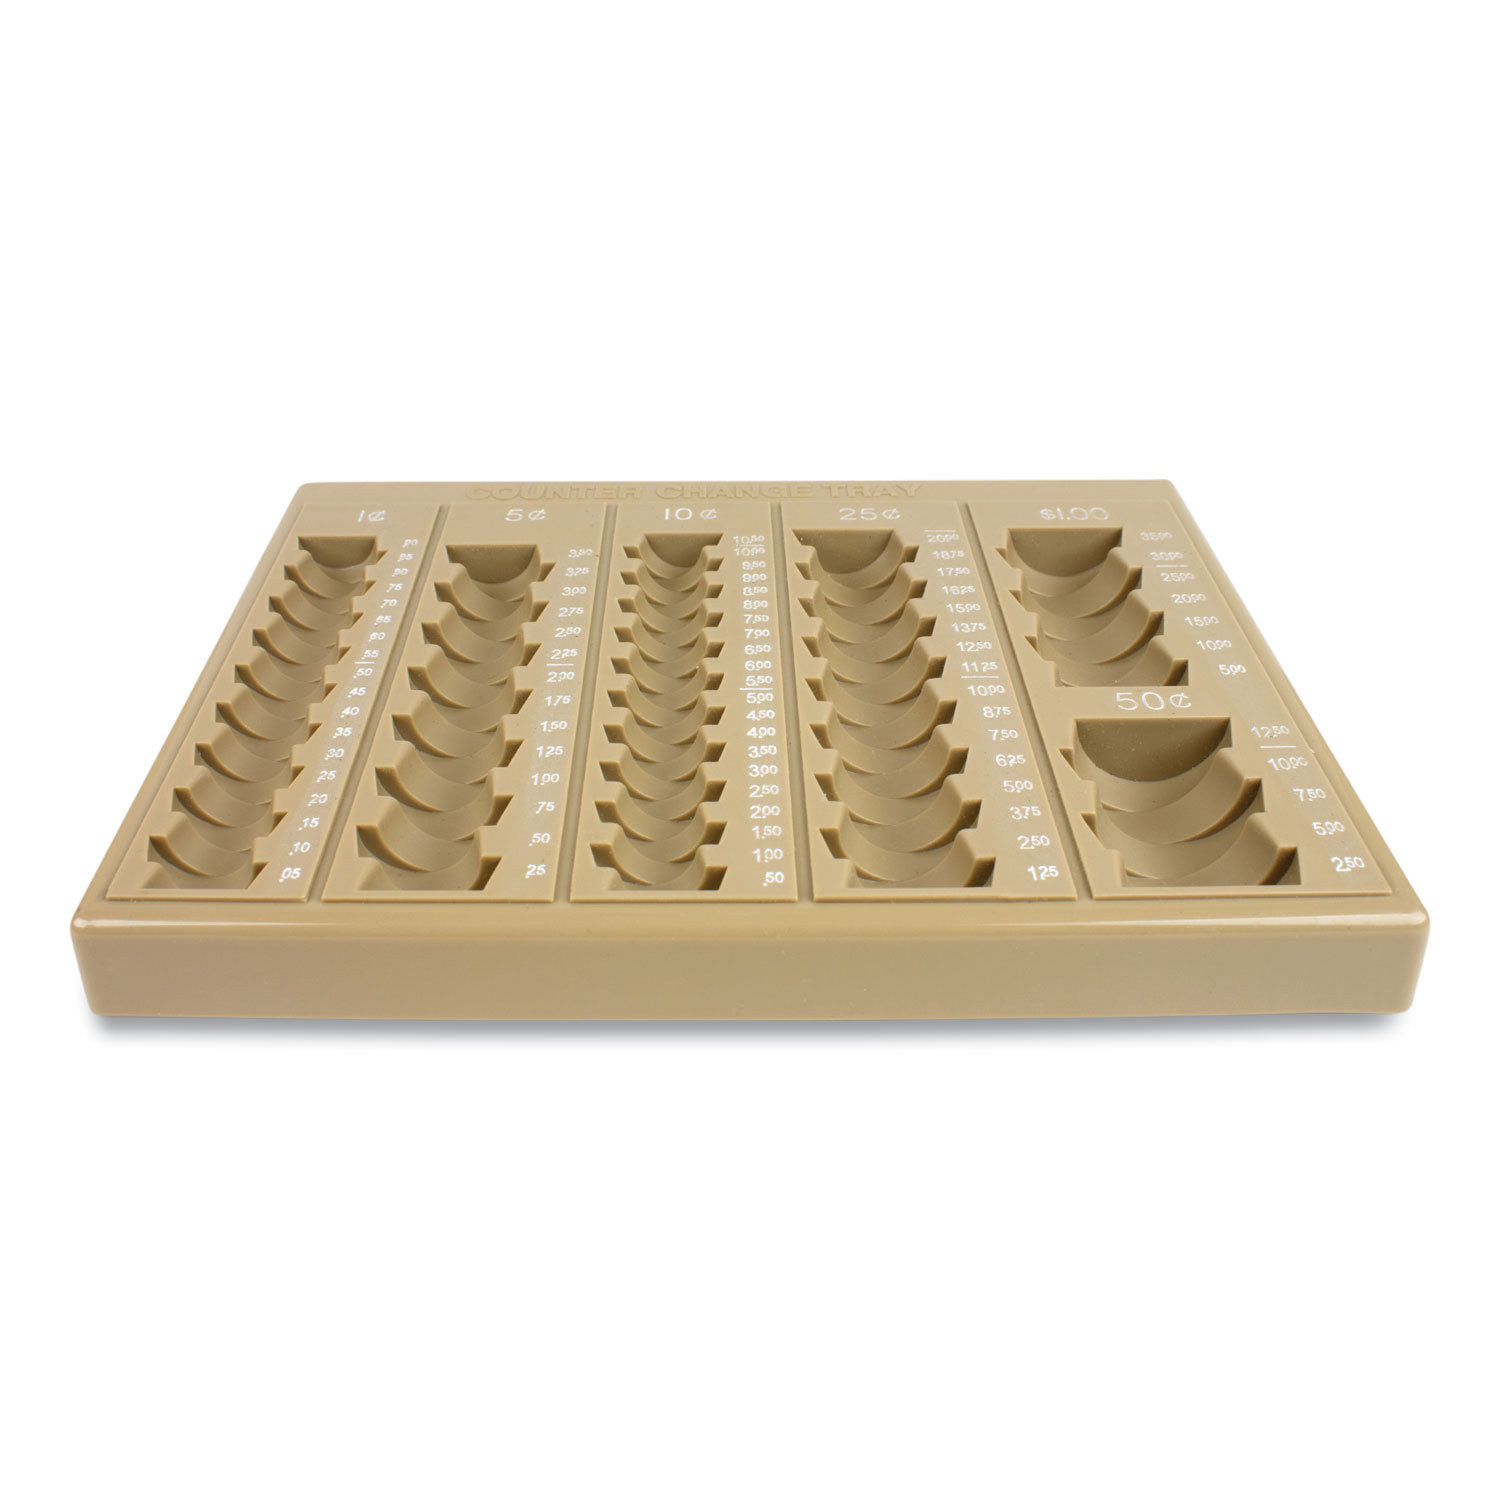 CONTROLTEK® Plastic Coin Tray, 6 Compartments, 7.75 x 10 x 1.5, Tan